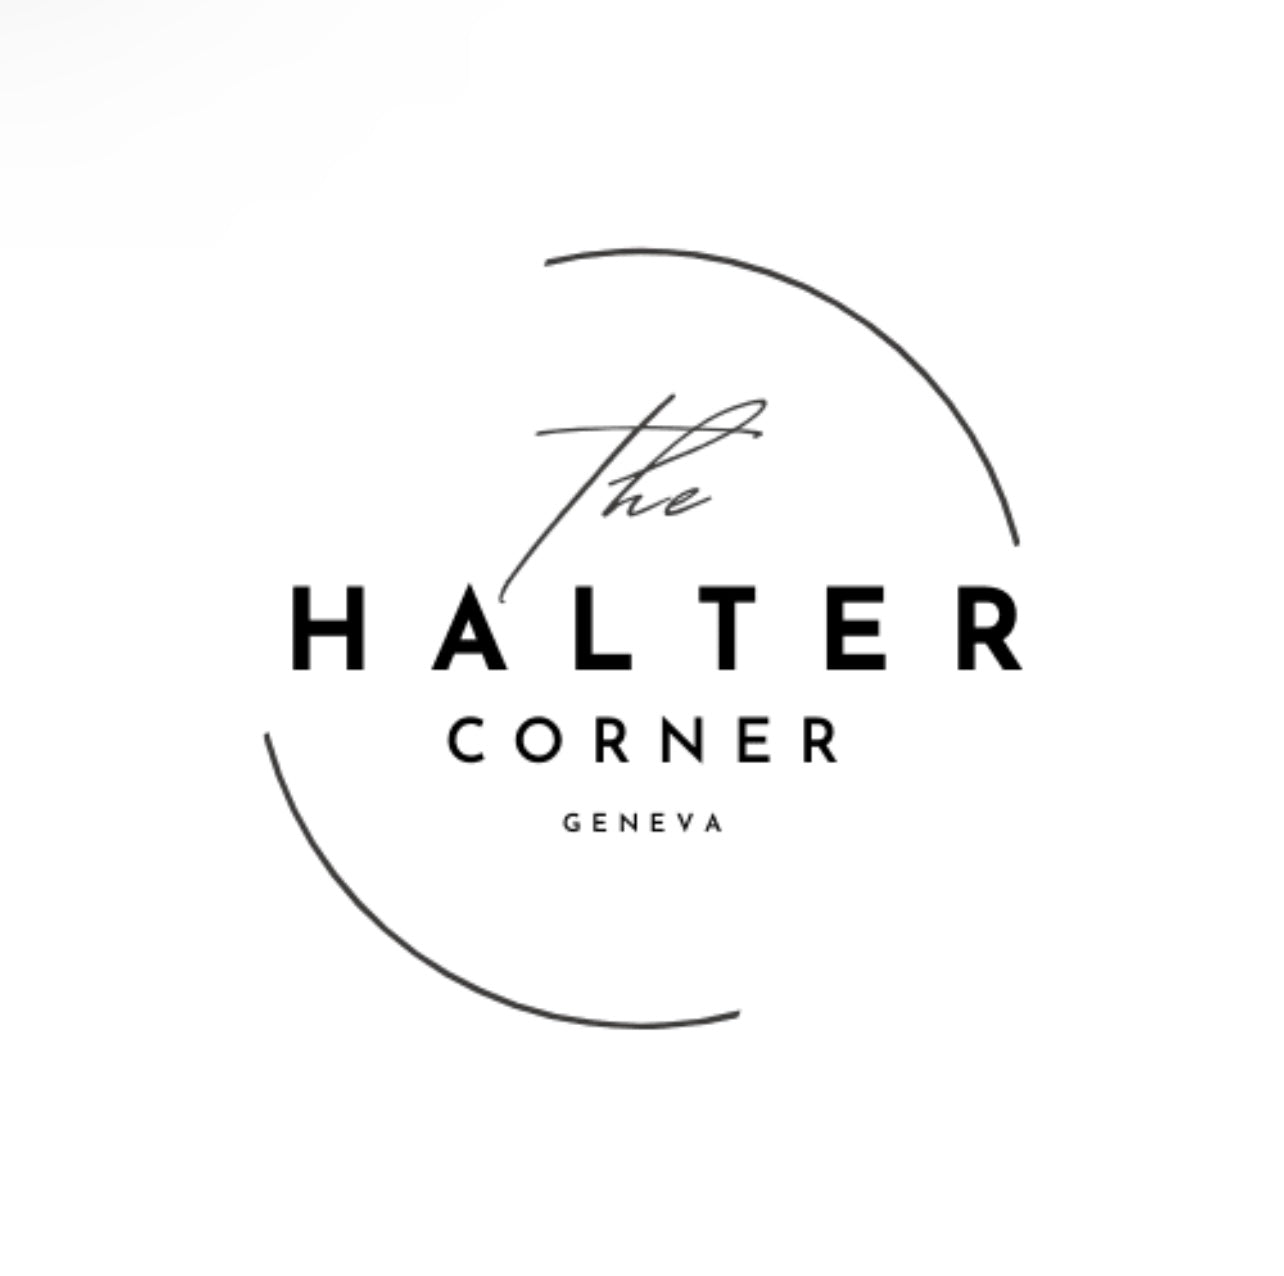 The Halter Corner